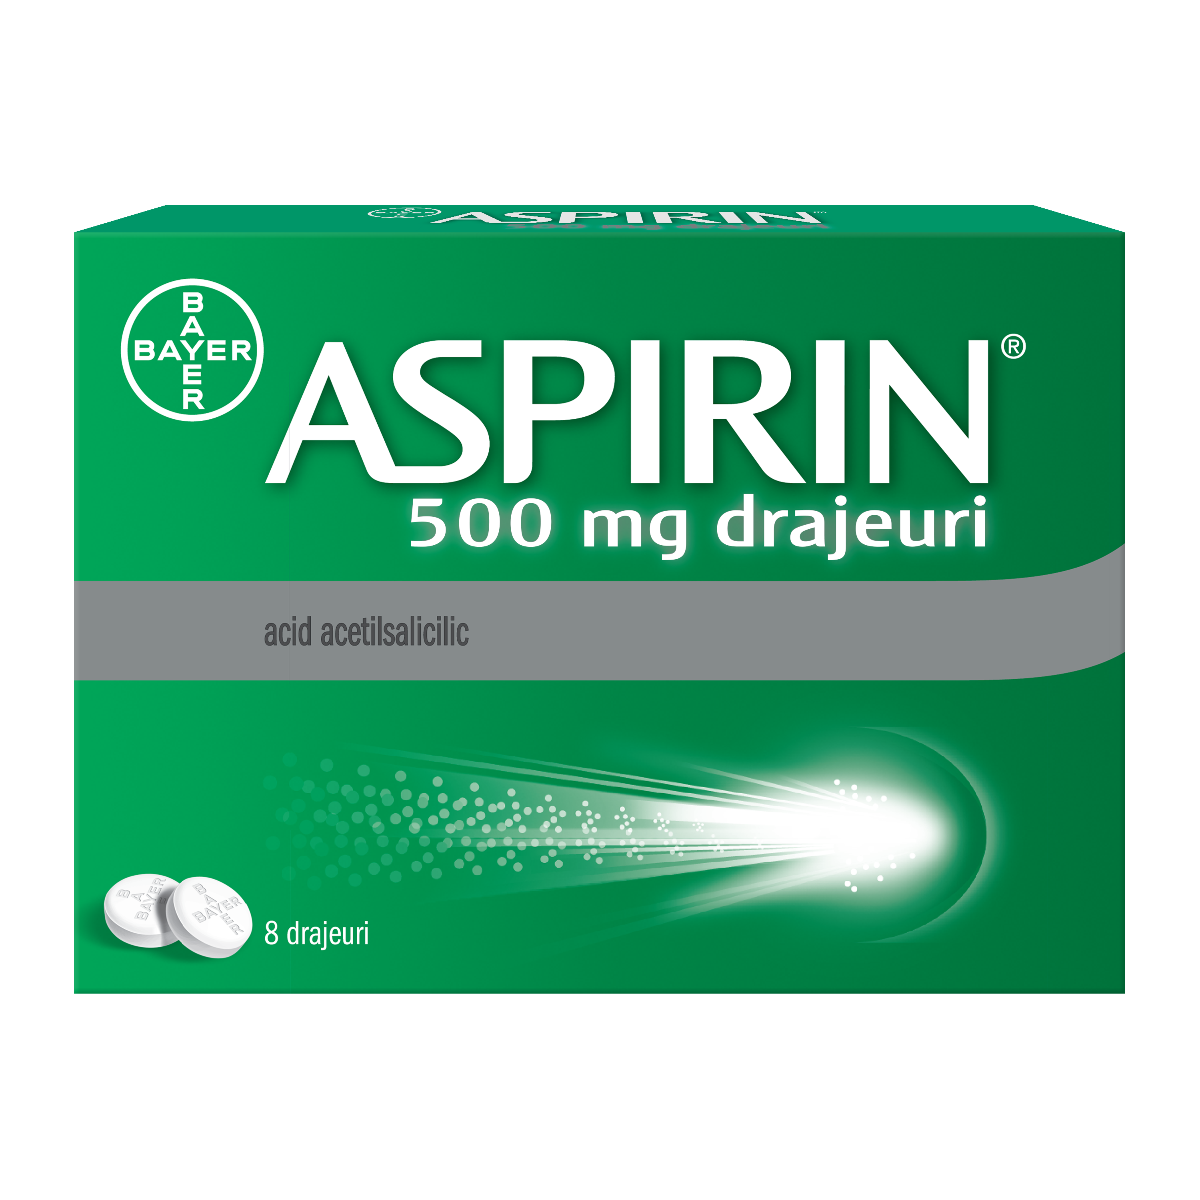 Reumatologie - Aspirin 500mg, 8 drajeuri, sinapis.ro